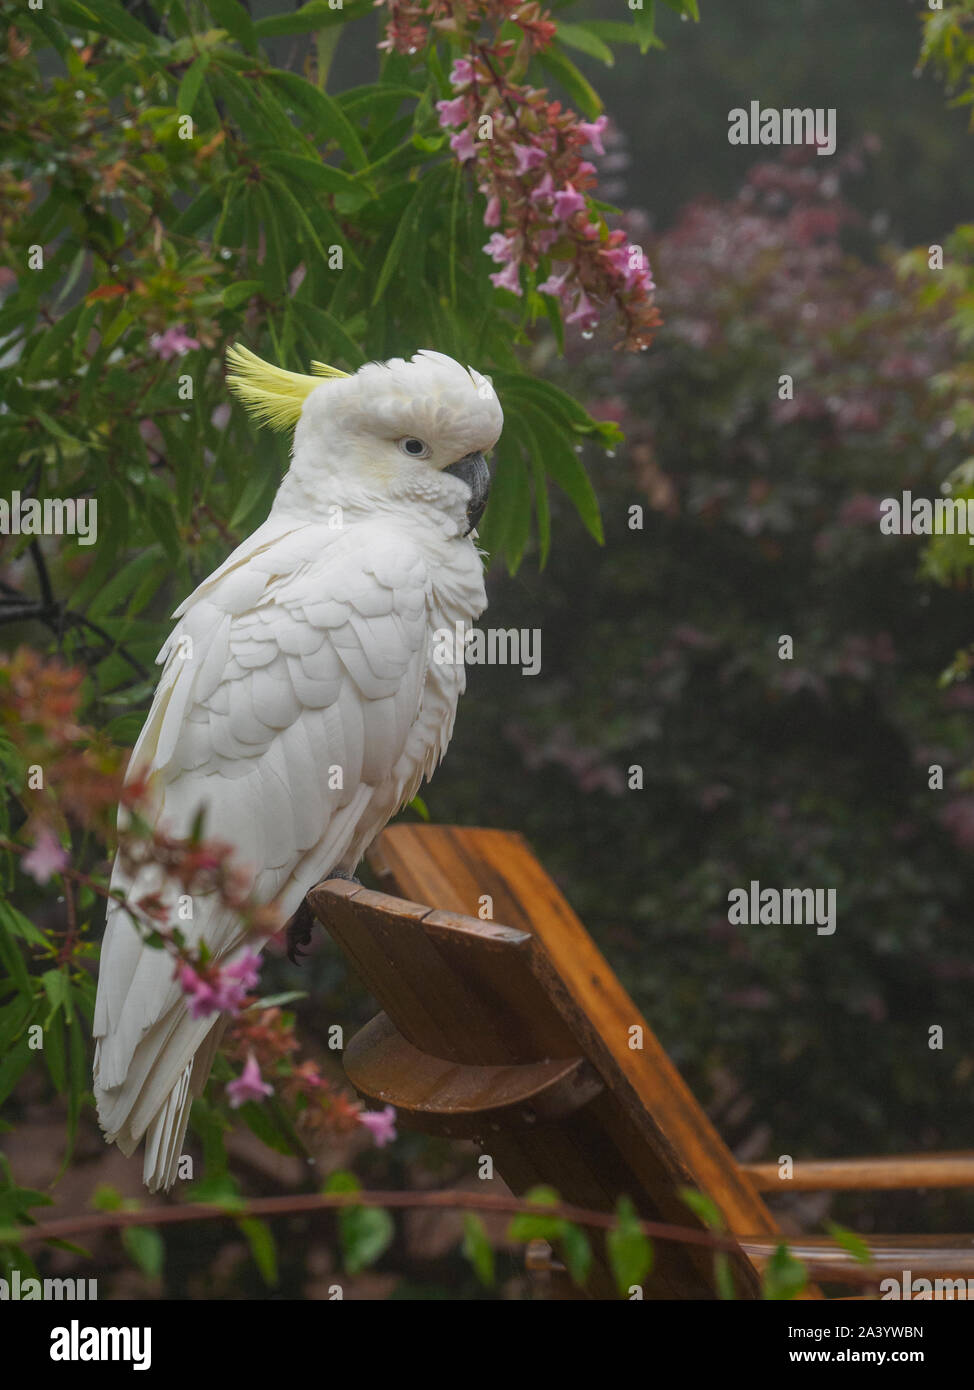 Cockatoo on wooden chair in garden in Katoomba, Australia Stock Photo